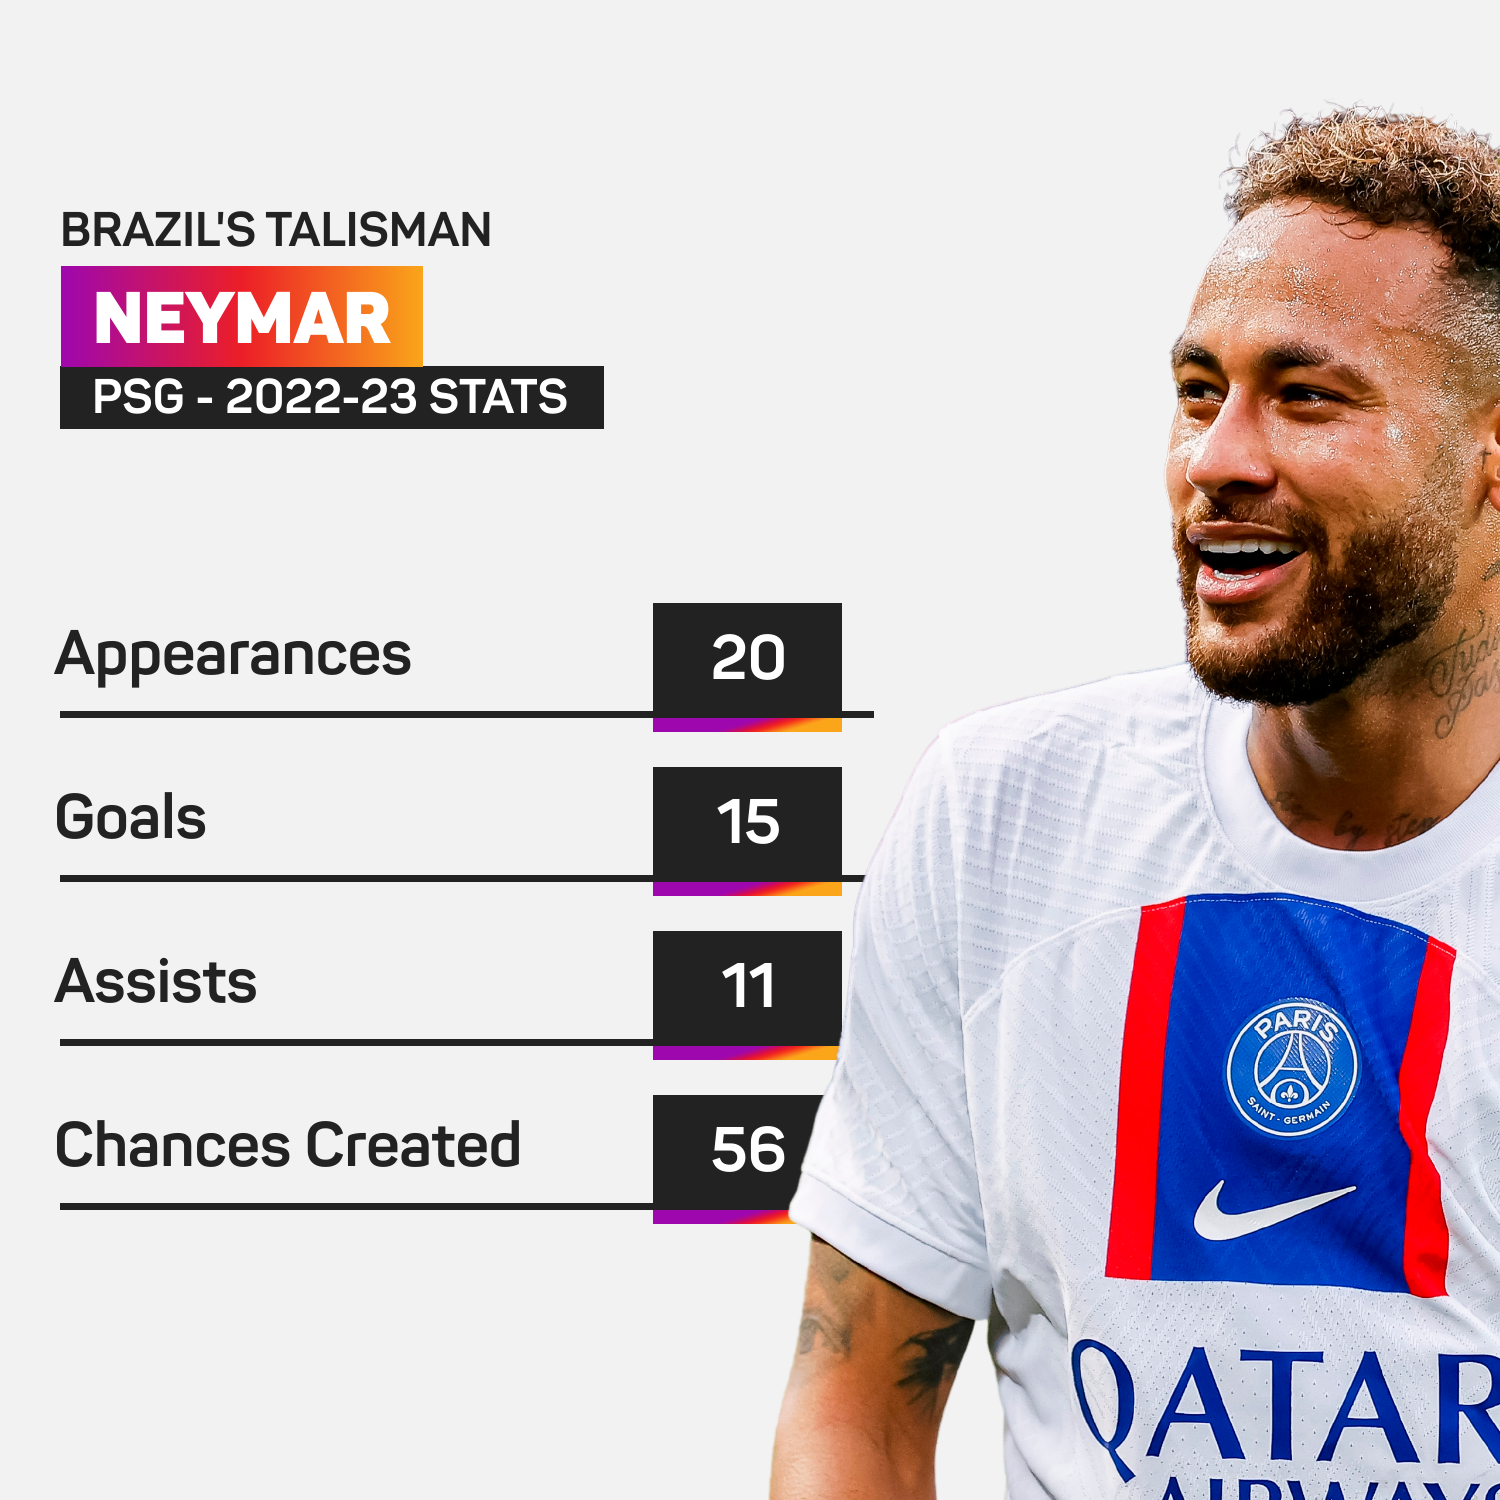 Neymar has been outstanding at Paris Saint-Germain this season